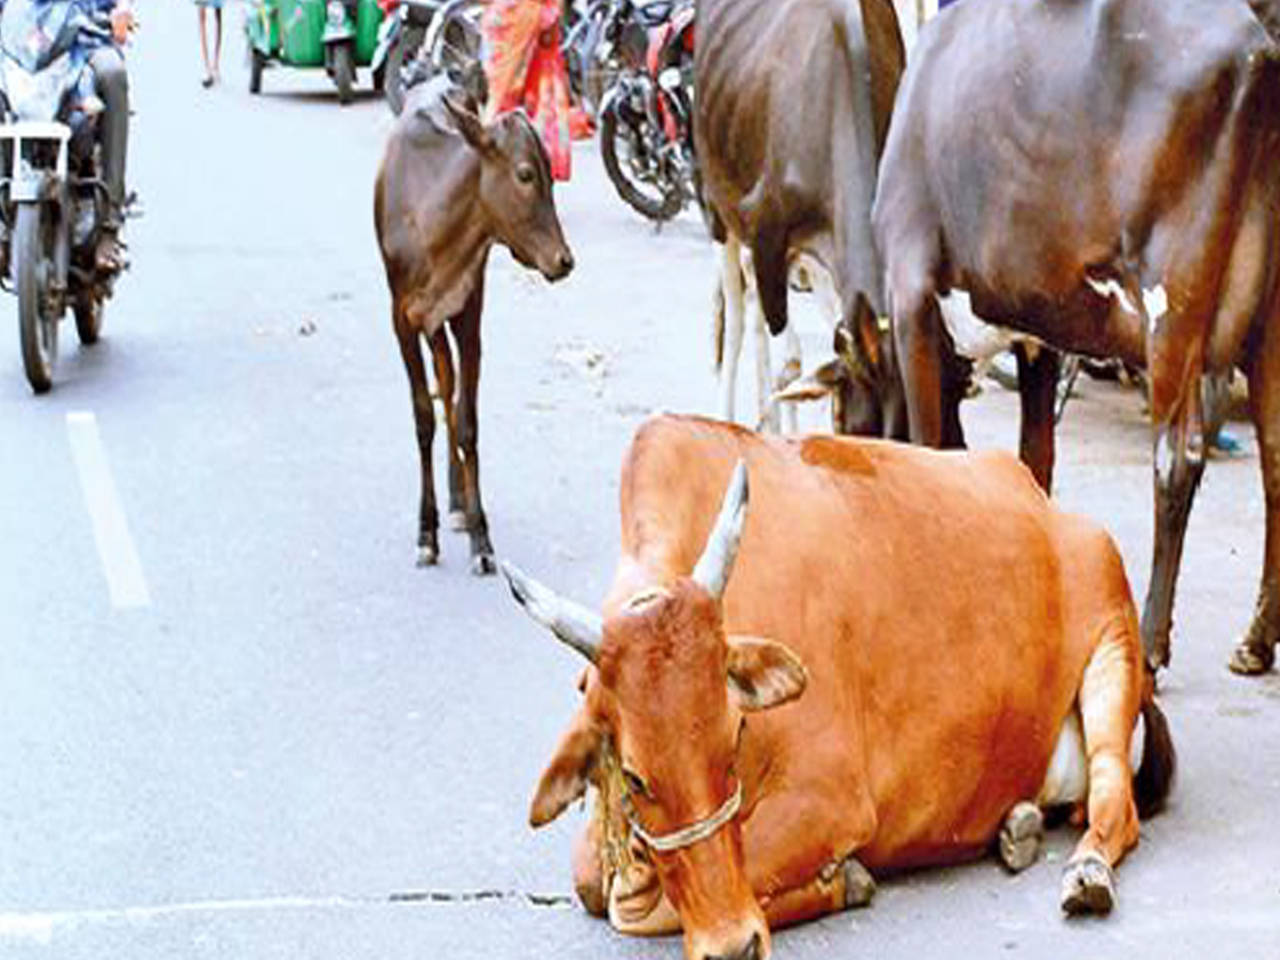 VMC to get tough on stray cattle menace | Vijayawada News - Times of India